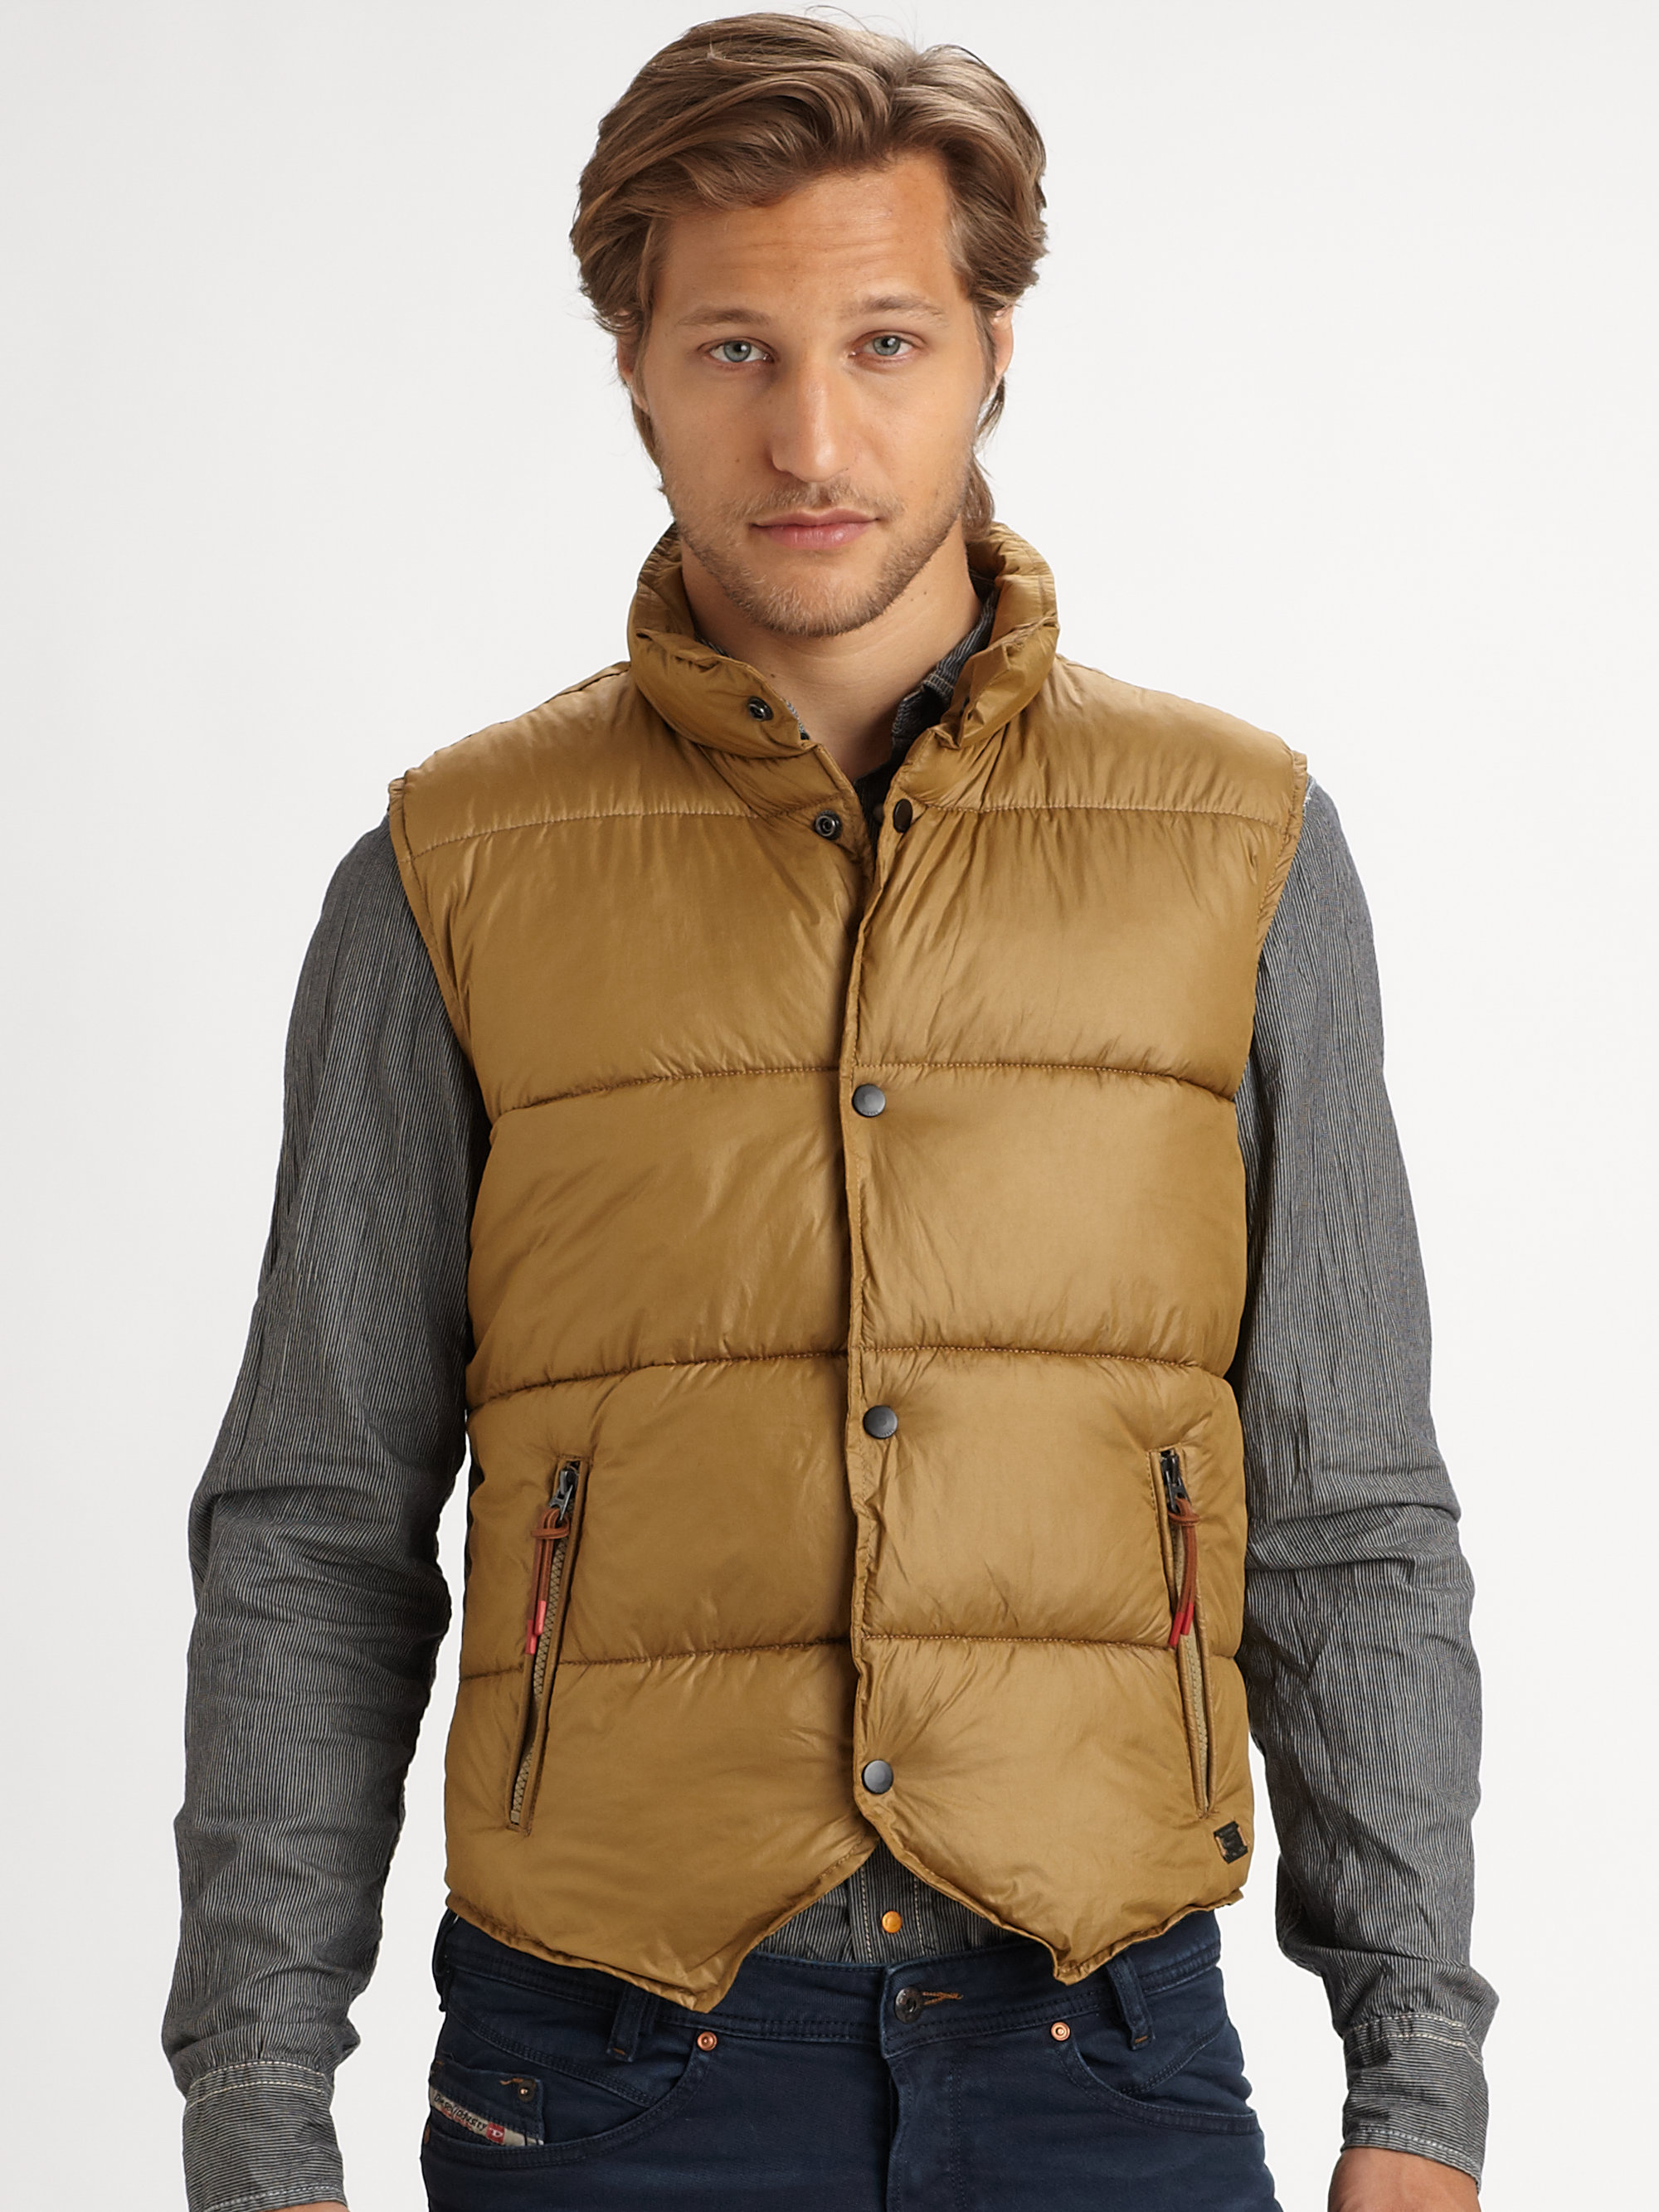 brown puffer vest